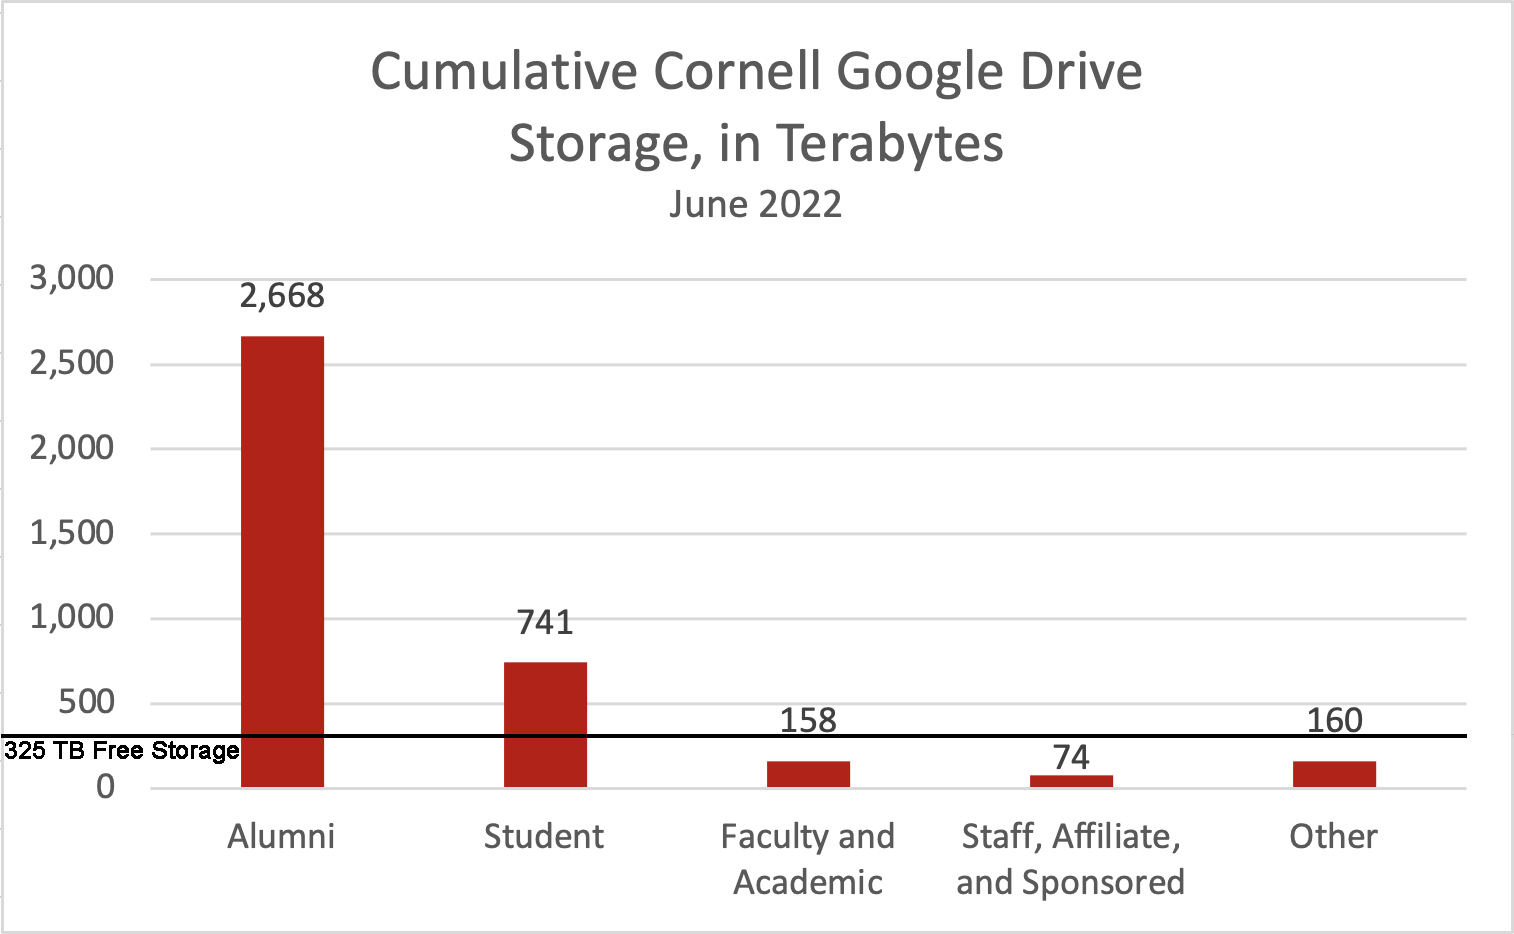 Cumulative Cornell Google Drive Storage, in Terabytes. Alumni use 2,668 Terabytes . Students use 741 Terabytes. Faculty and Academic use 158 Terabytes. Staff, Affiliate, and Sponsored use 74 Terabytes. Other groups use 160 Terabytes.